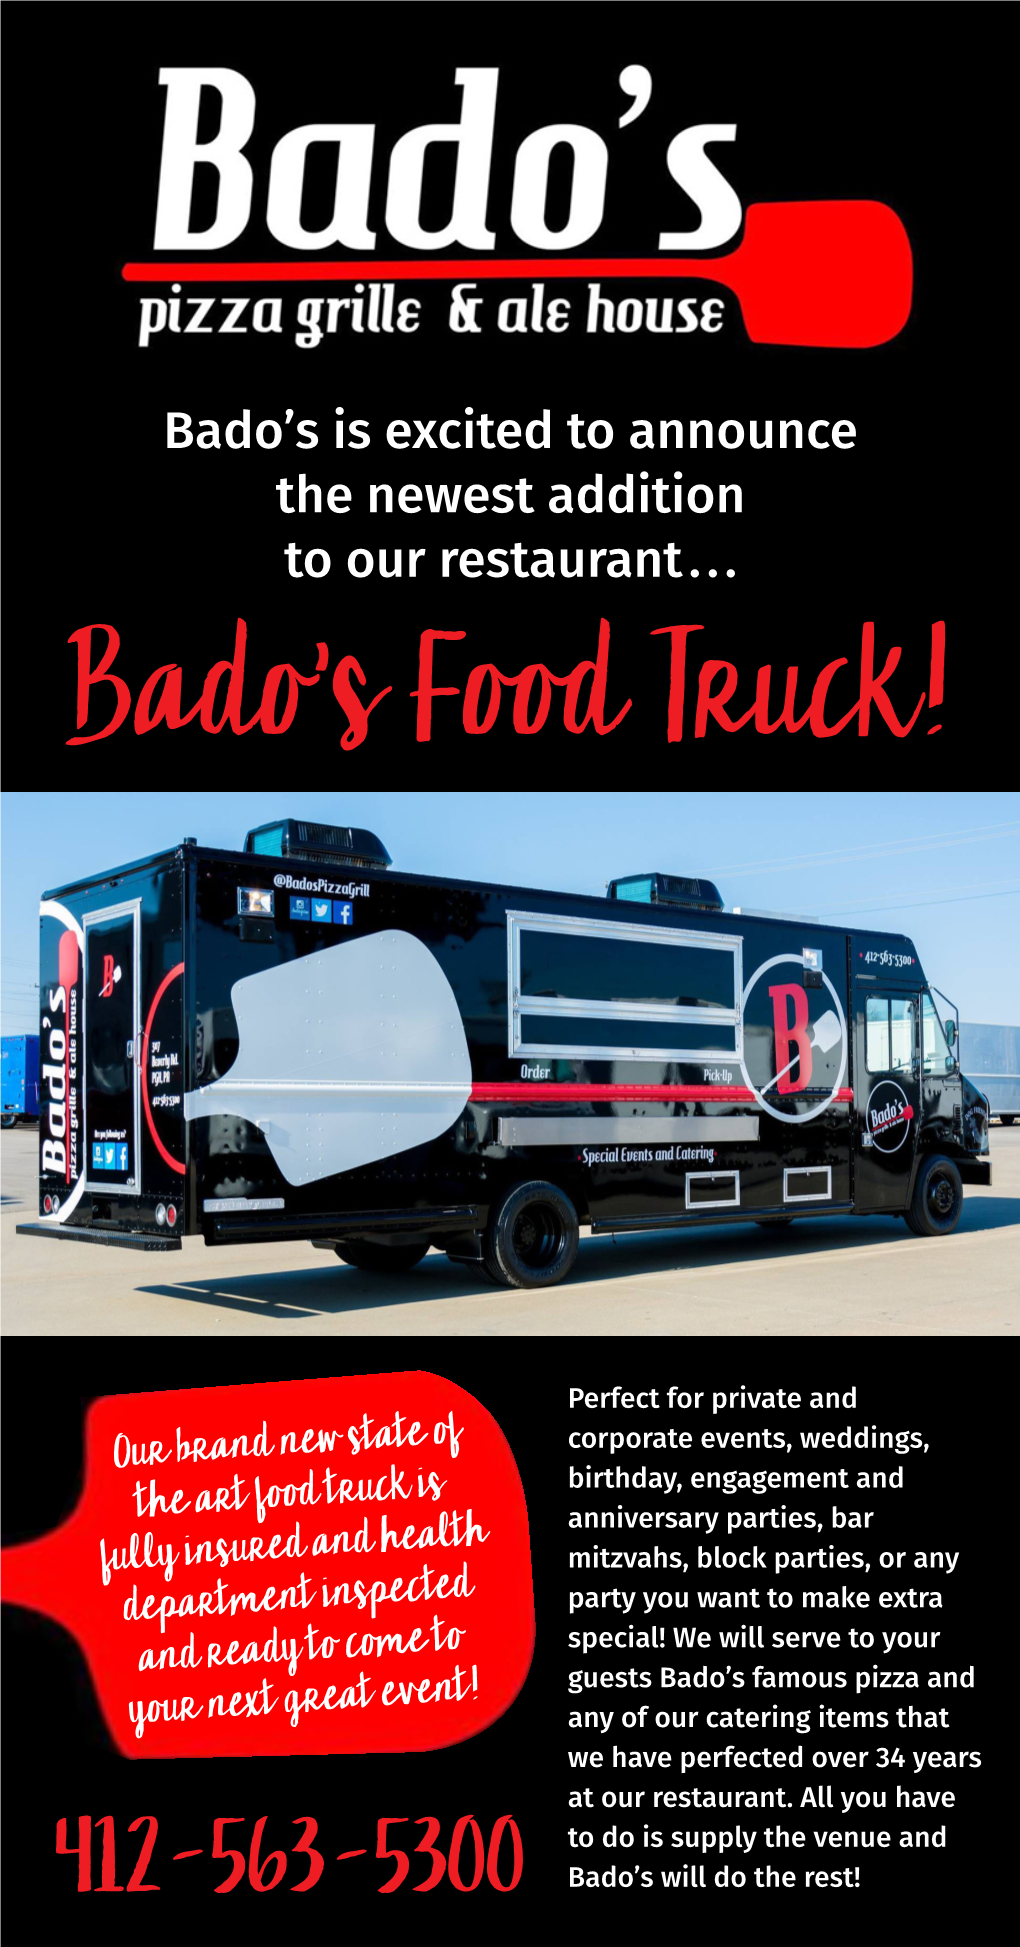 Bado's Food Truck!